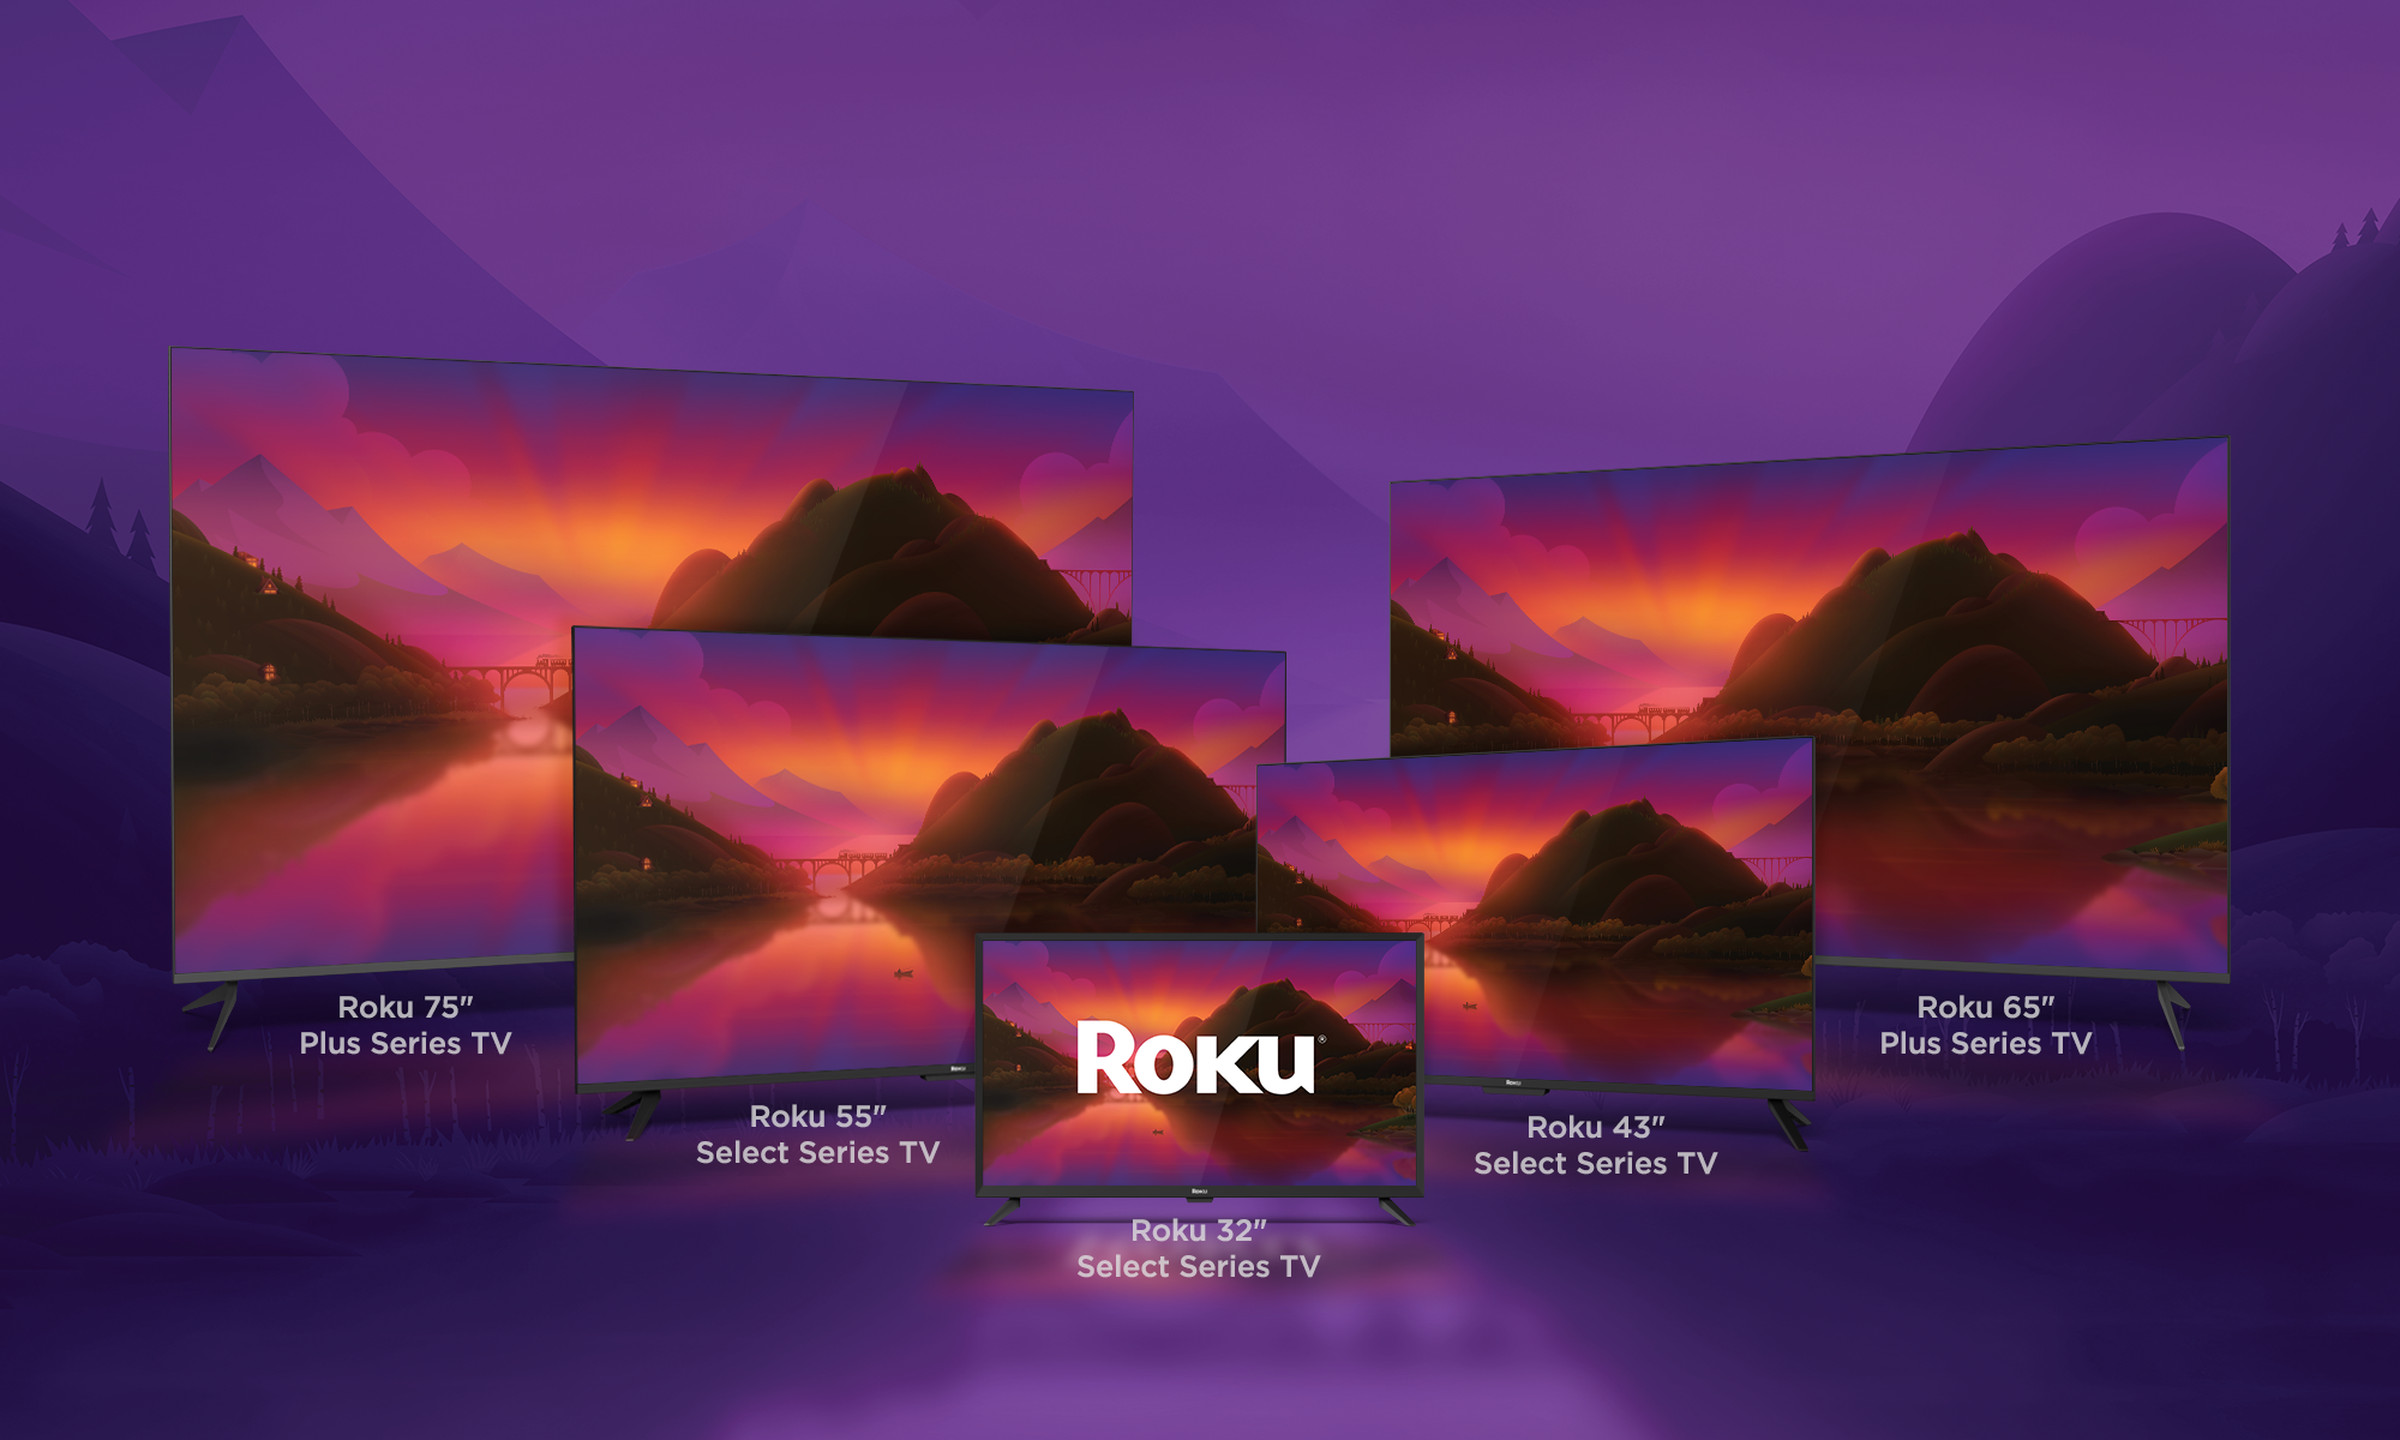 An image of Roku’s new TV lineup.